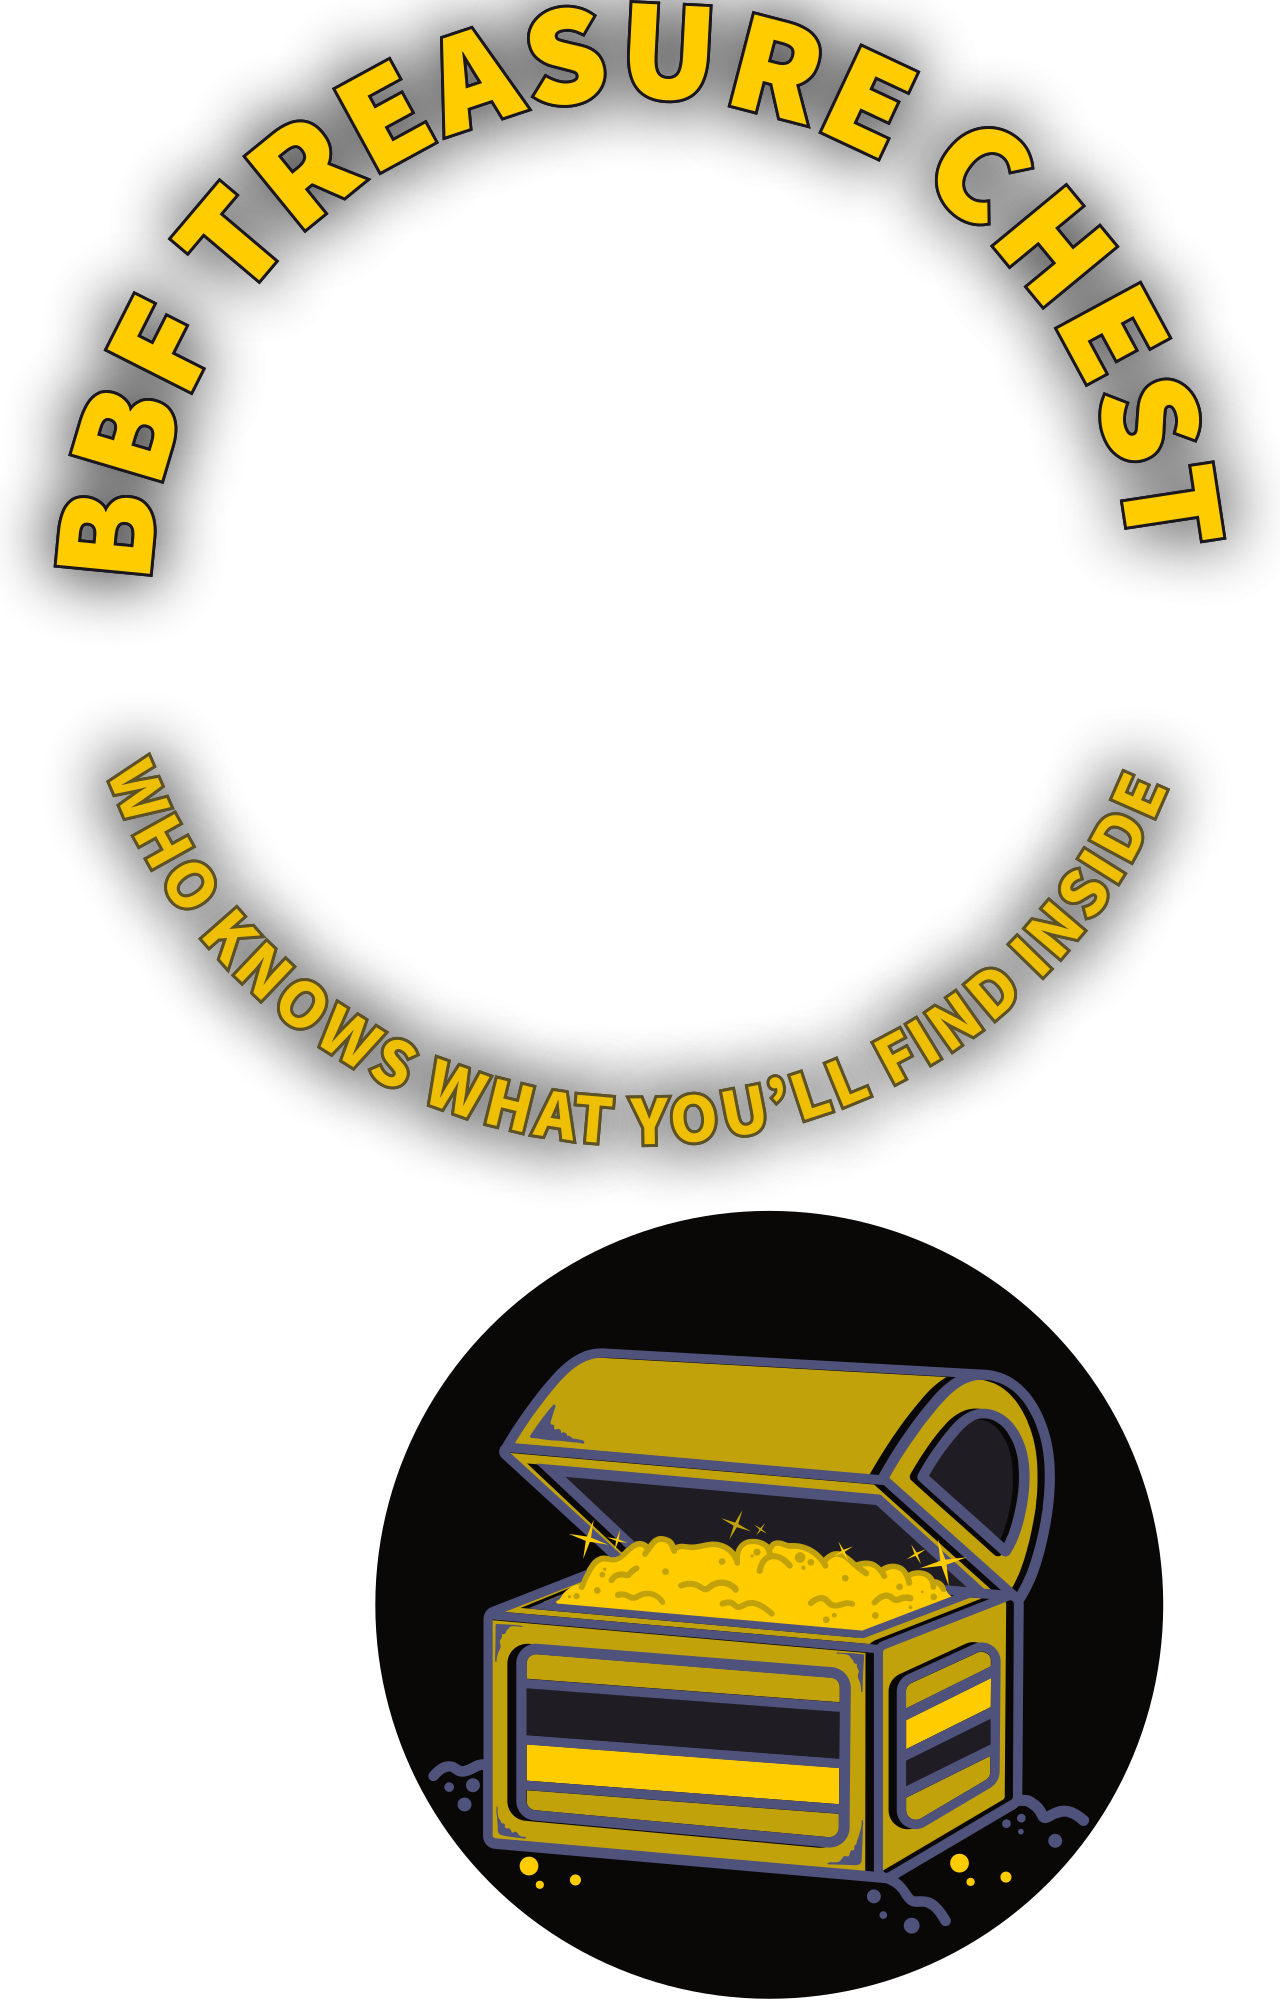 BBF Treasure chest 's logo